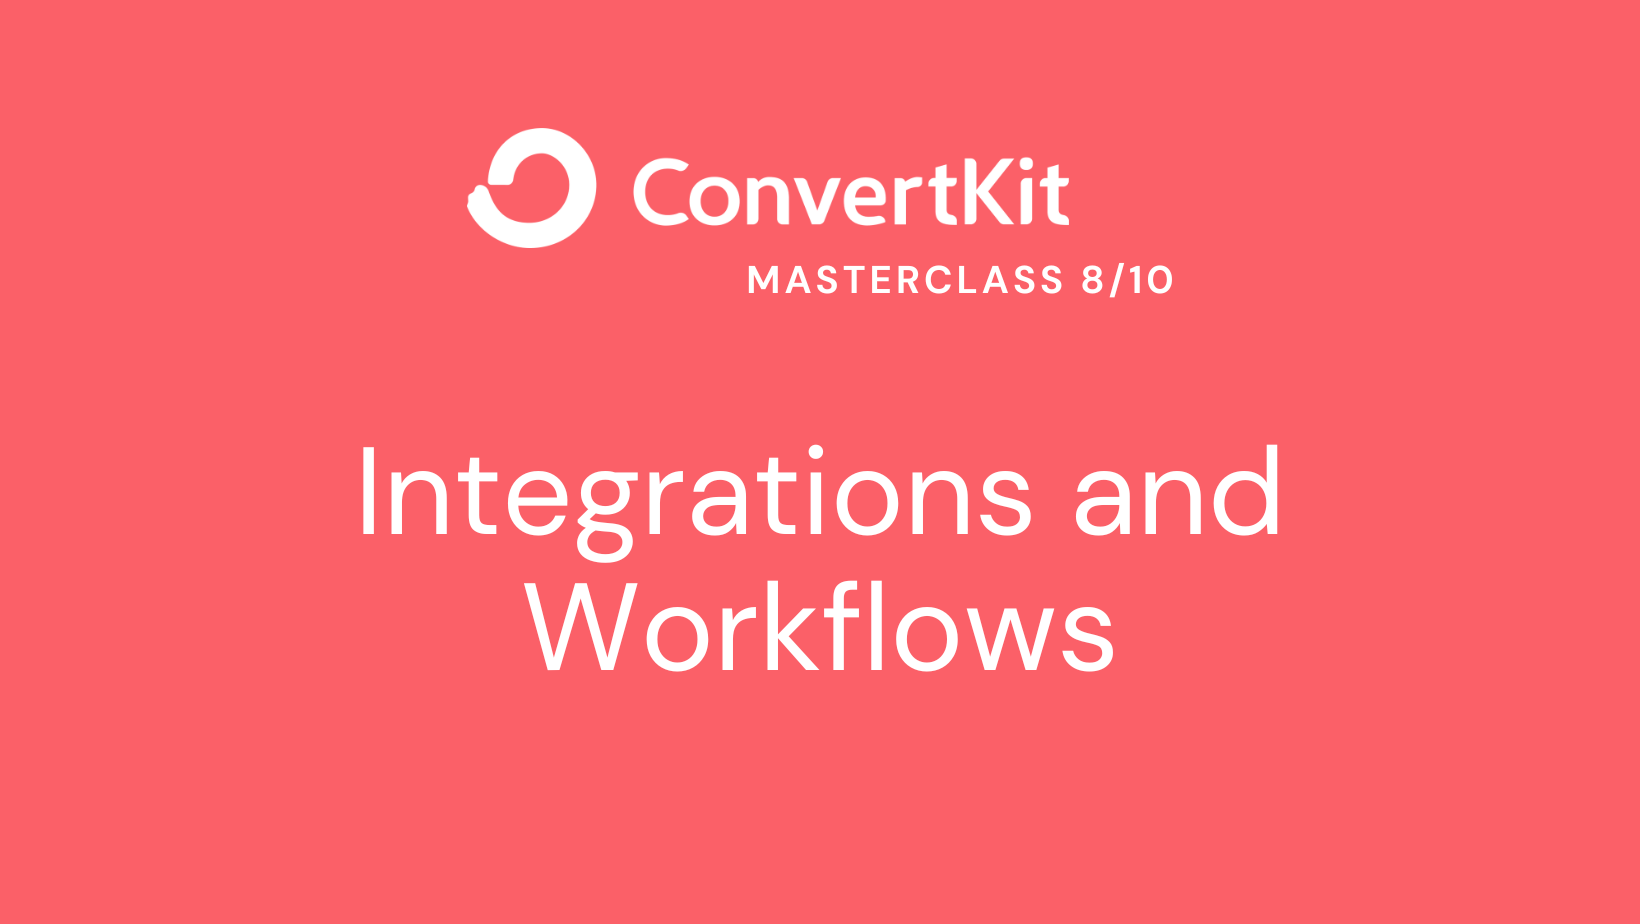 ConvertKit Masterclass 8/10 Integrations and Workflows